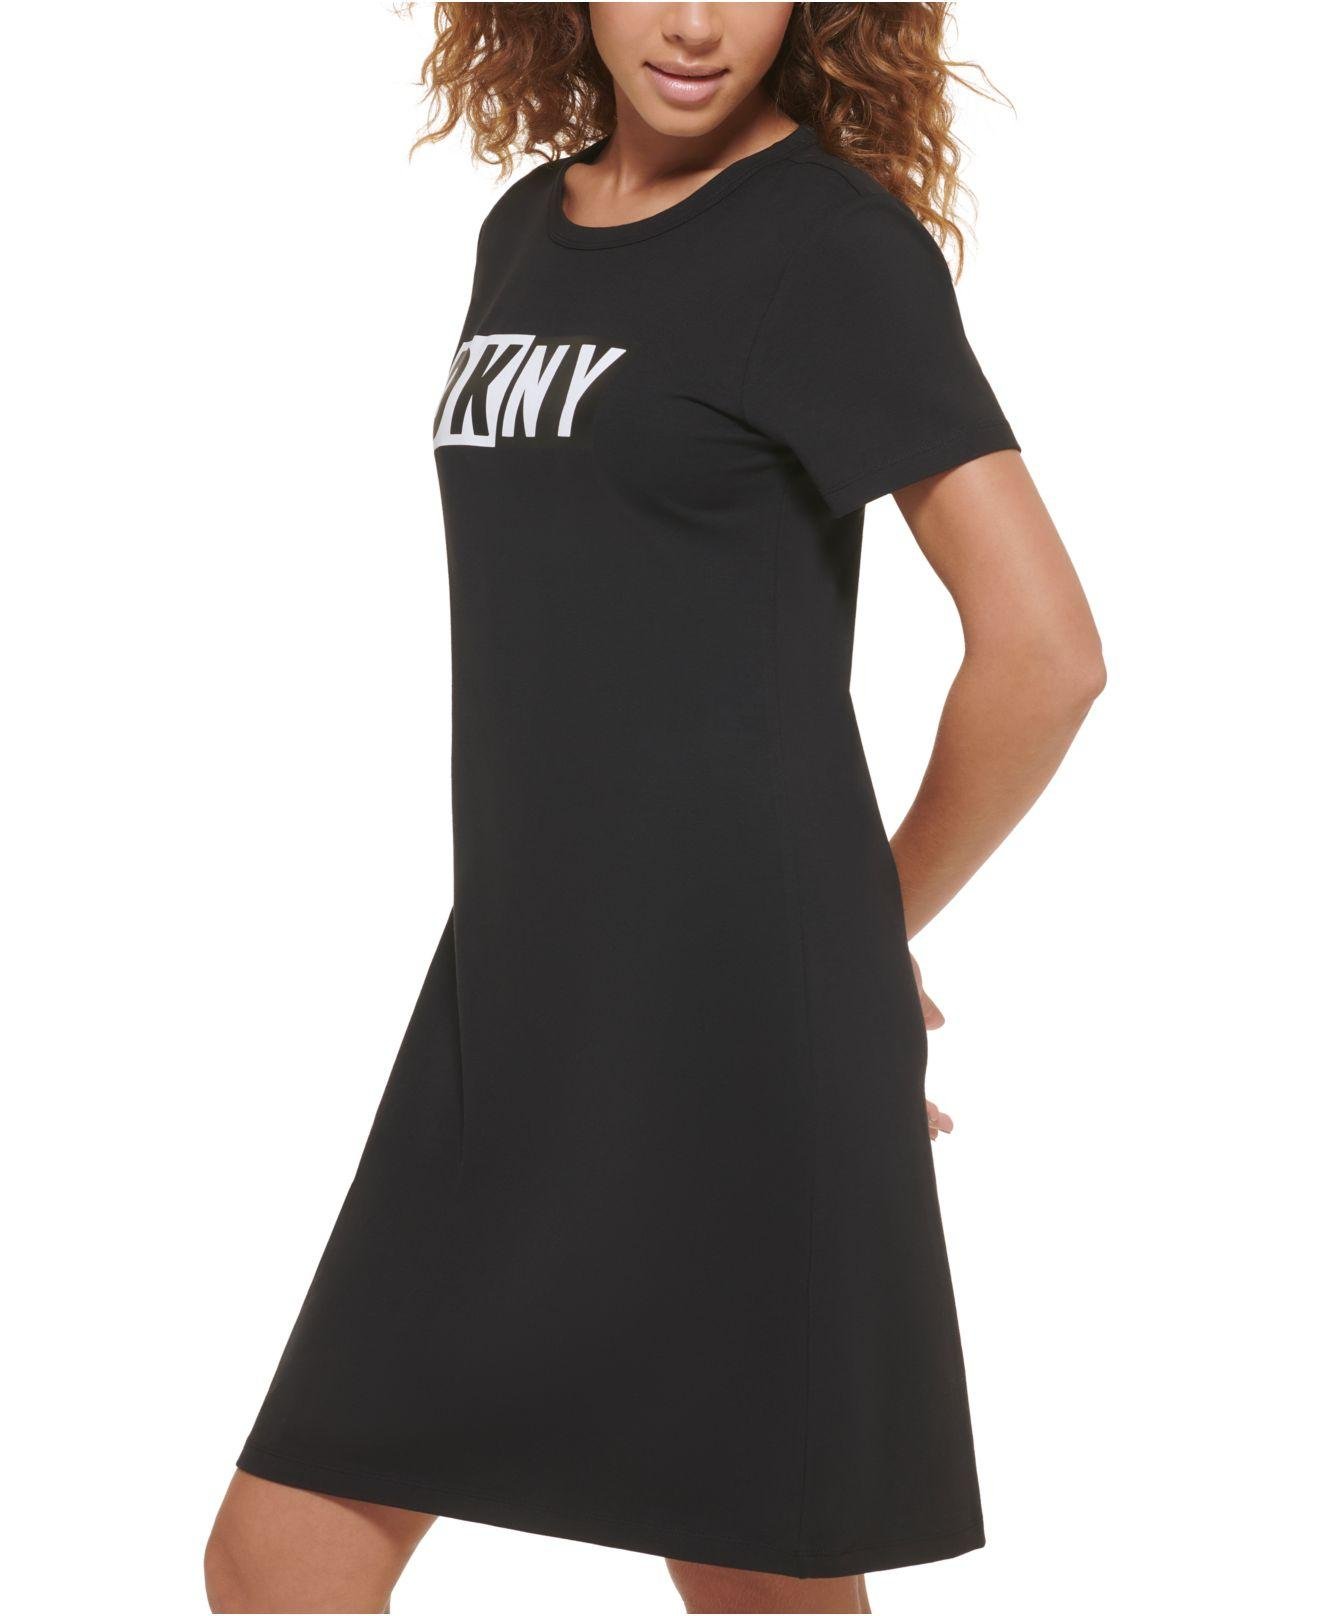 DKNY Women's T-Shirt Dress With Logo Taping, Heather Grey, Medium